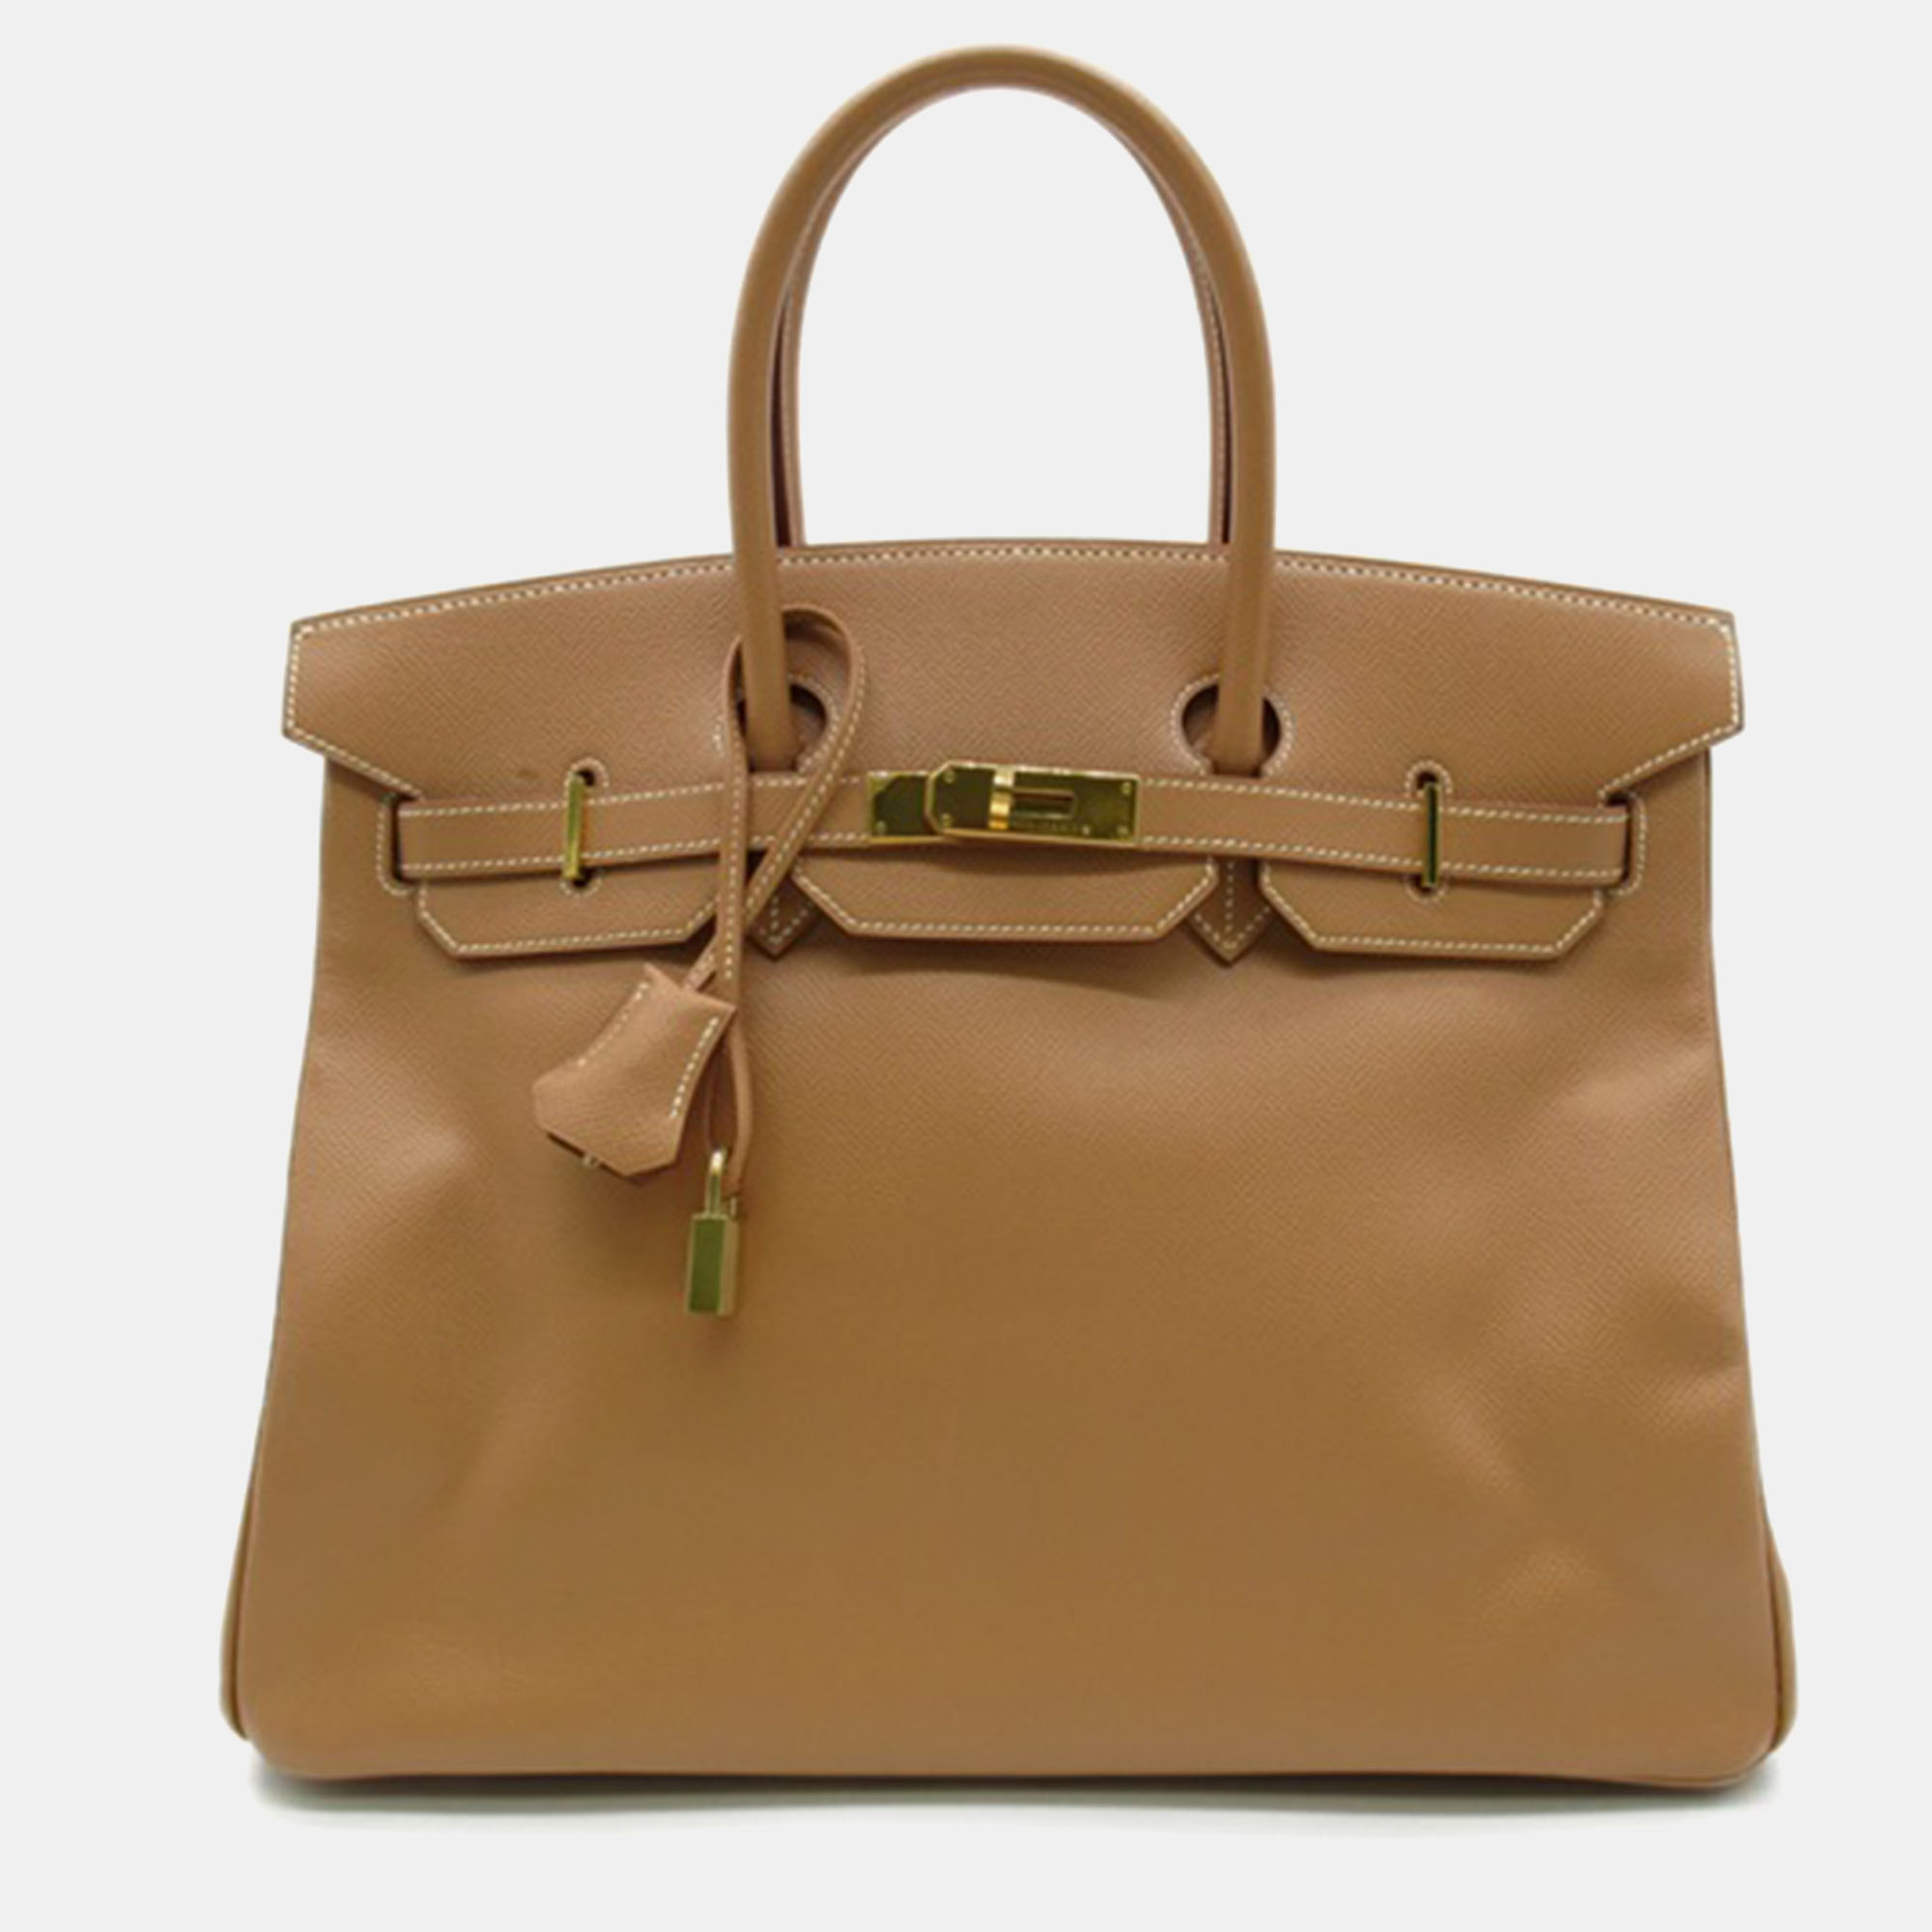 

Hermes Brown Leather Togo Birkin 35 handbag